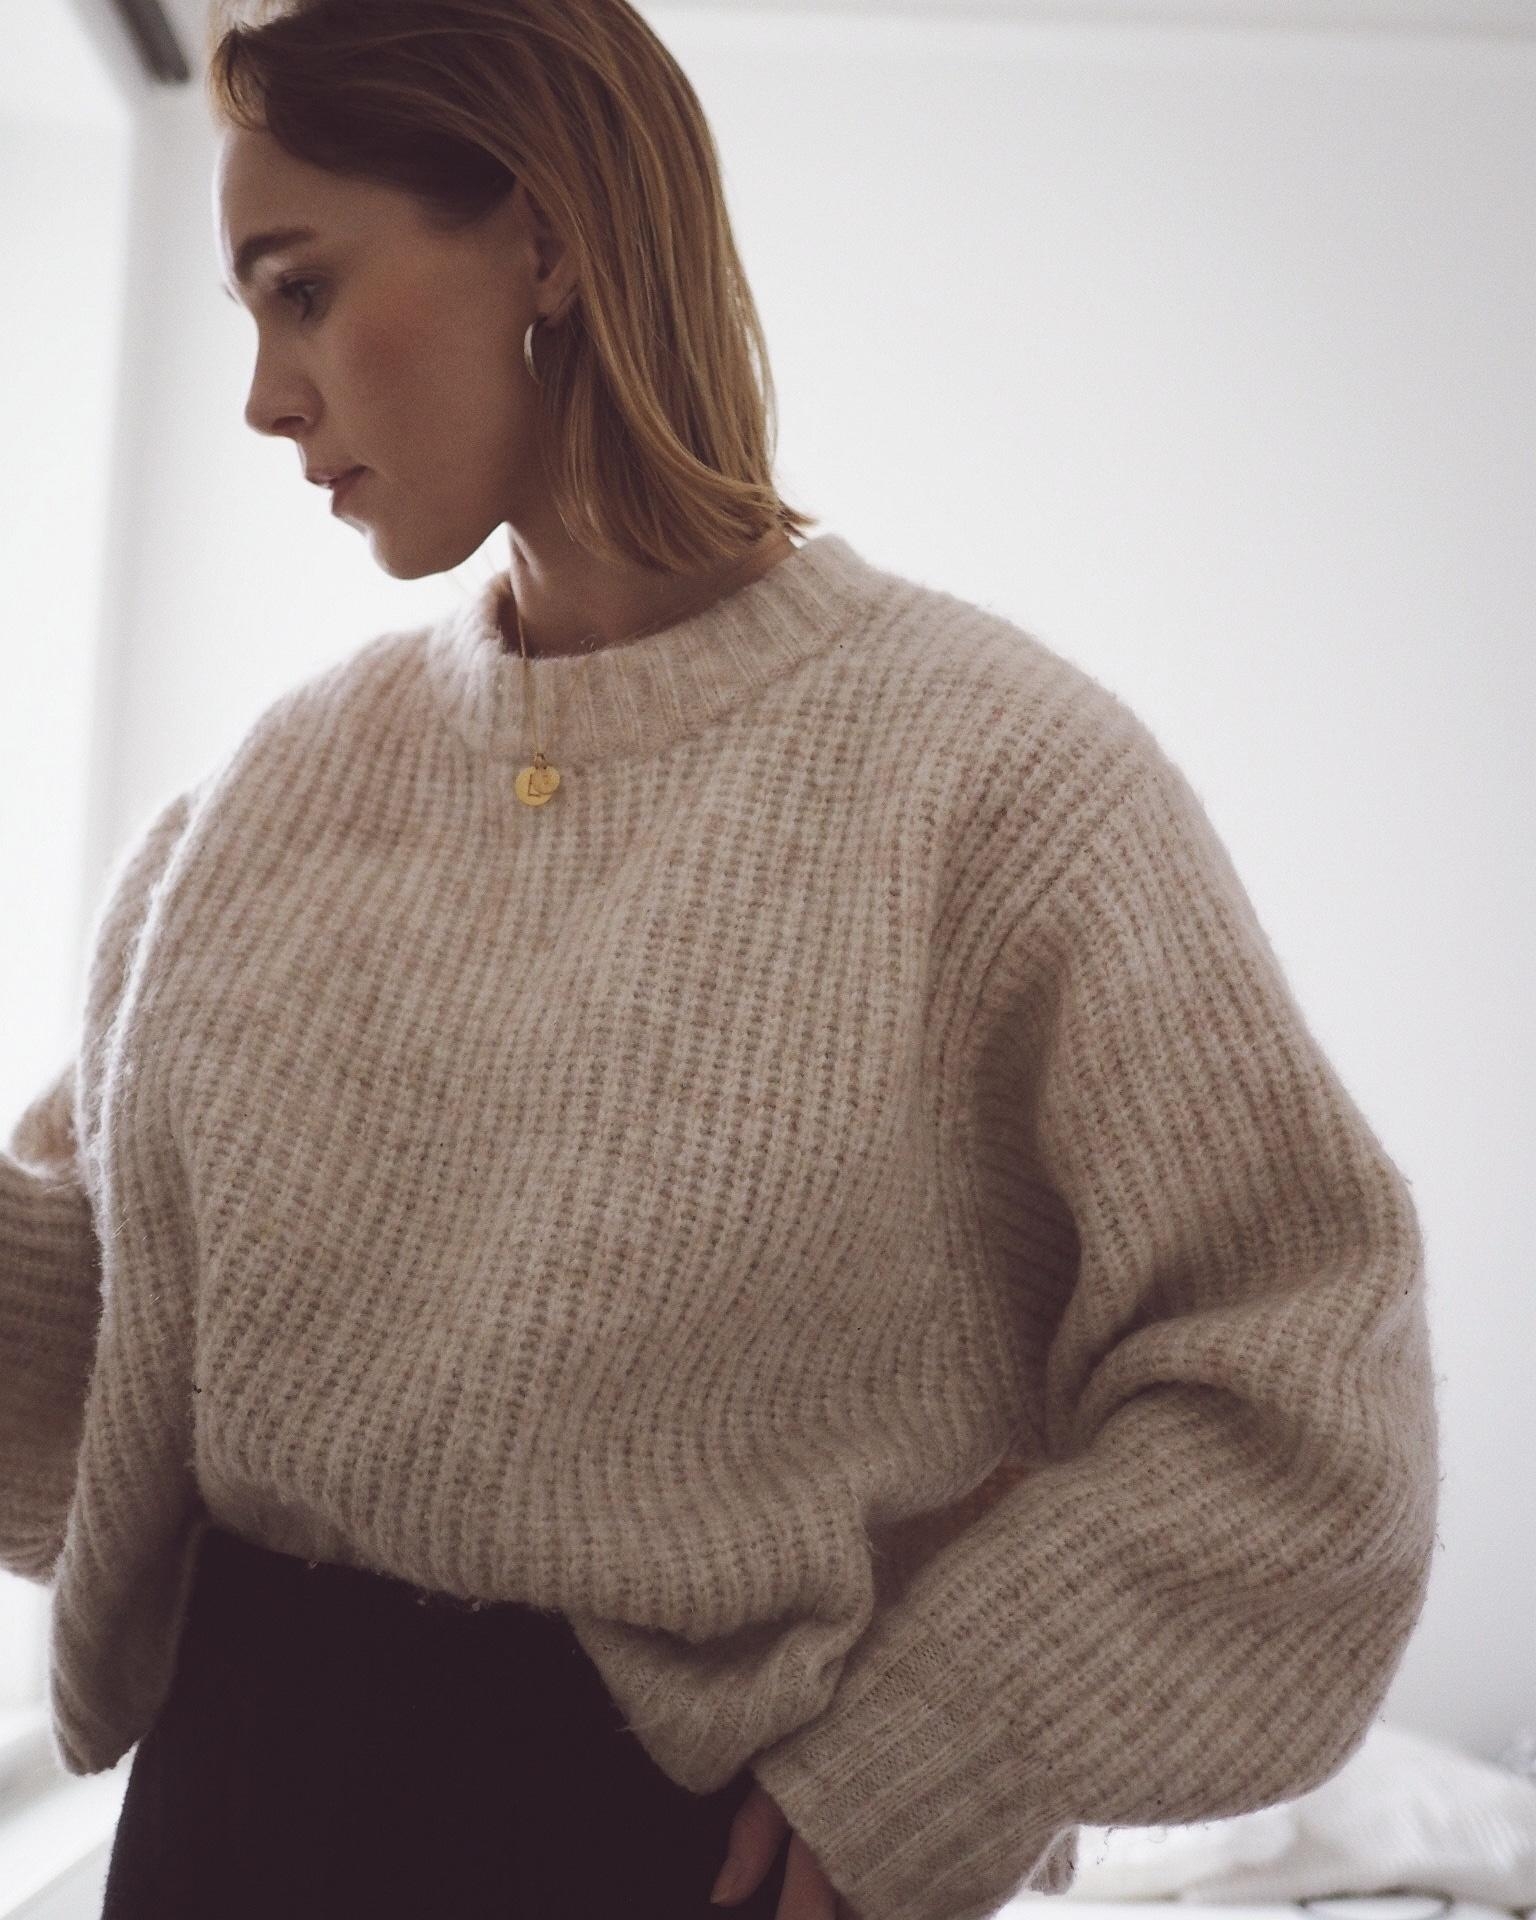 Big knit 🐑 #ootd #fashion #strick #winteroutfit #fashioncrush #details 